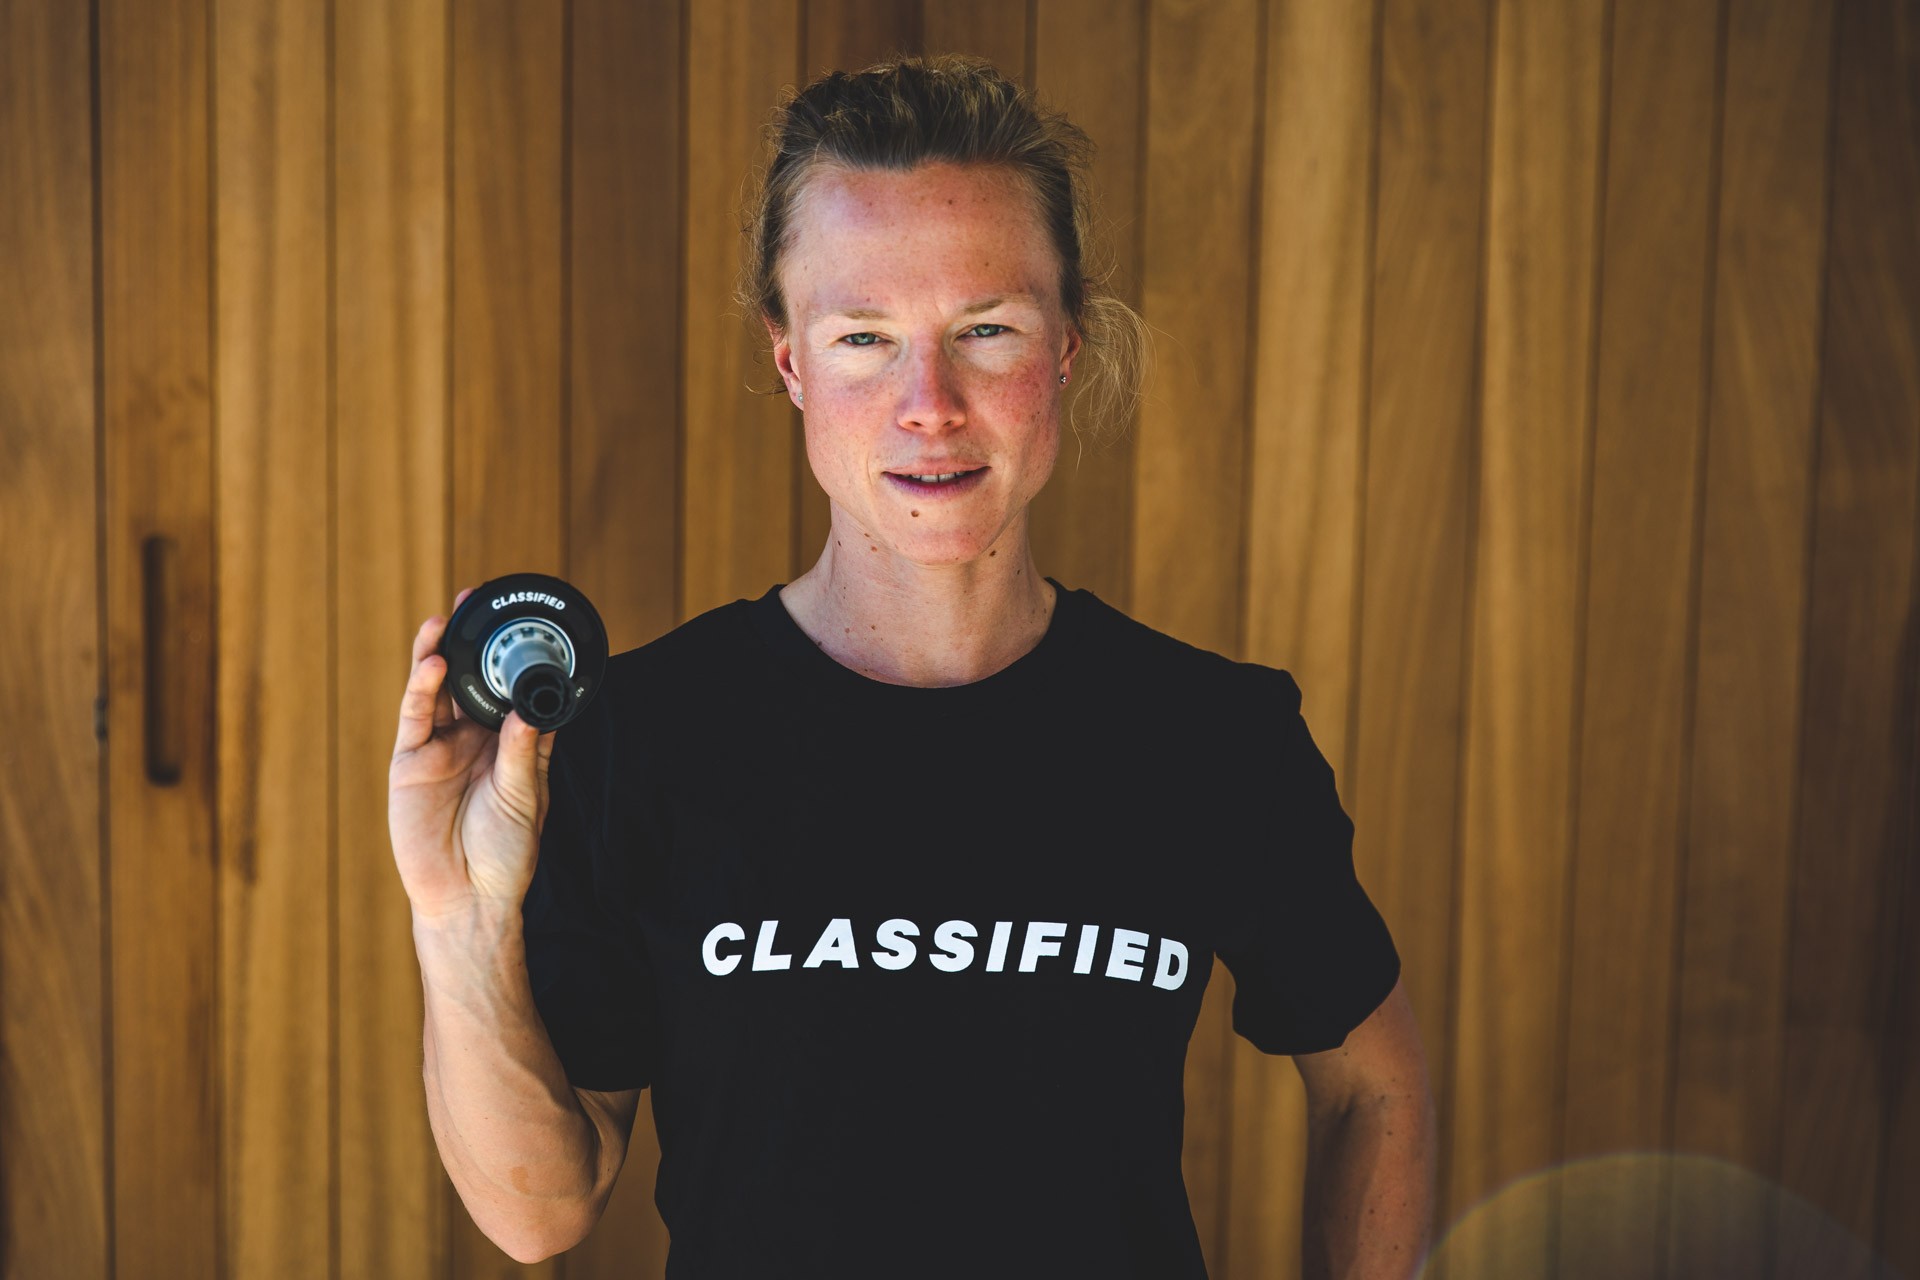 Ruth Astle riding Classified Powershift Technology triathlon